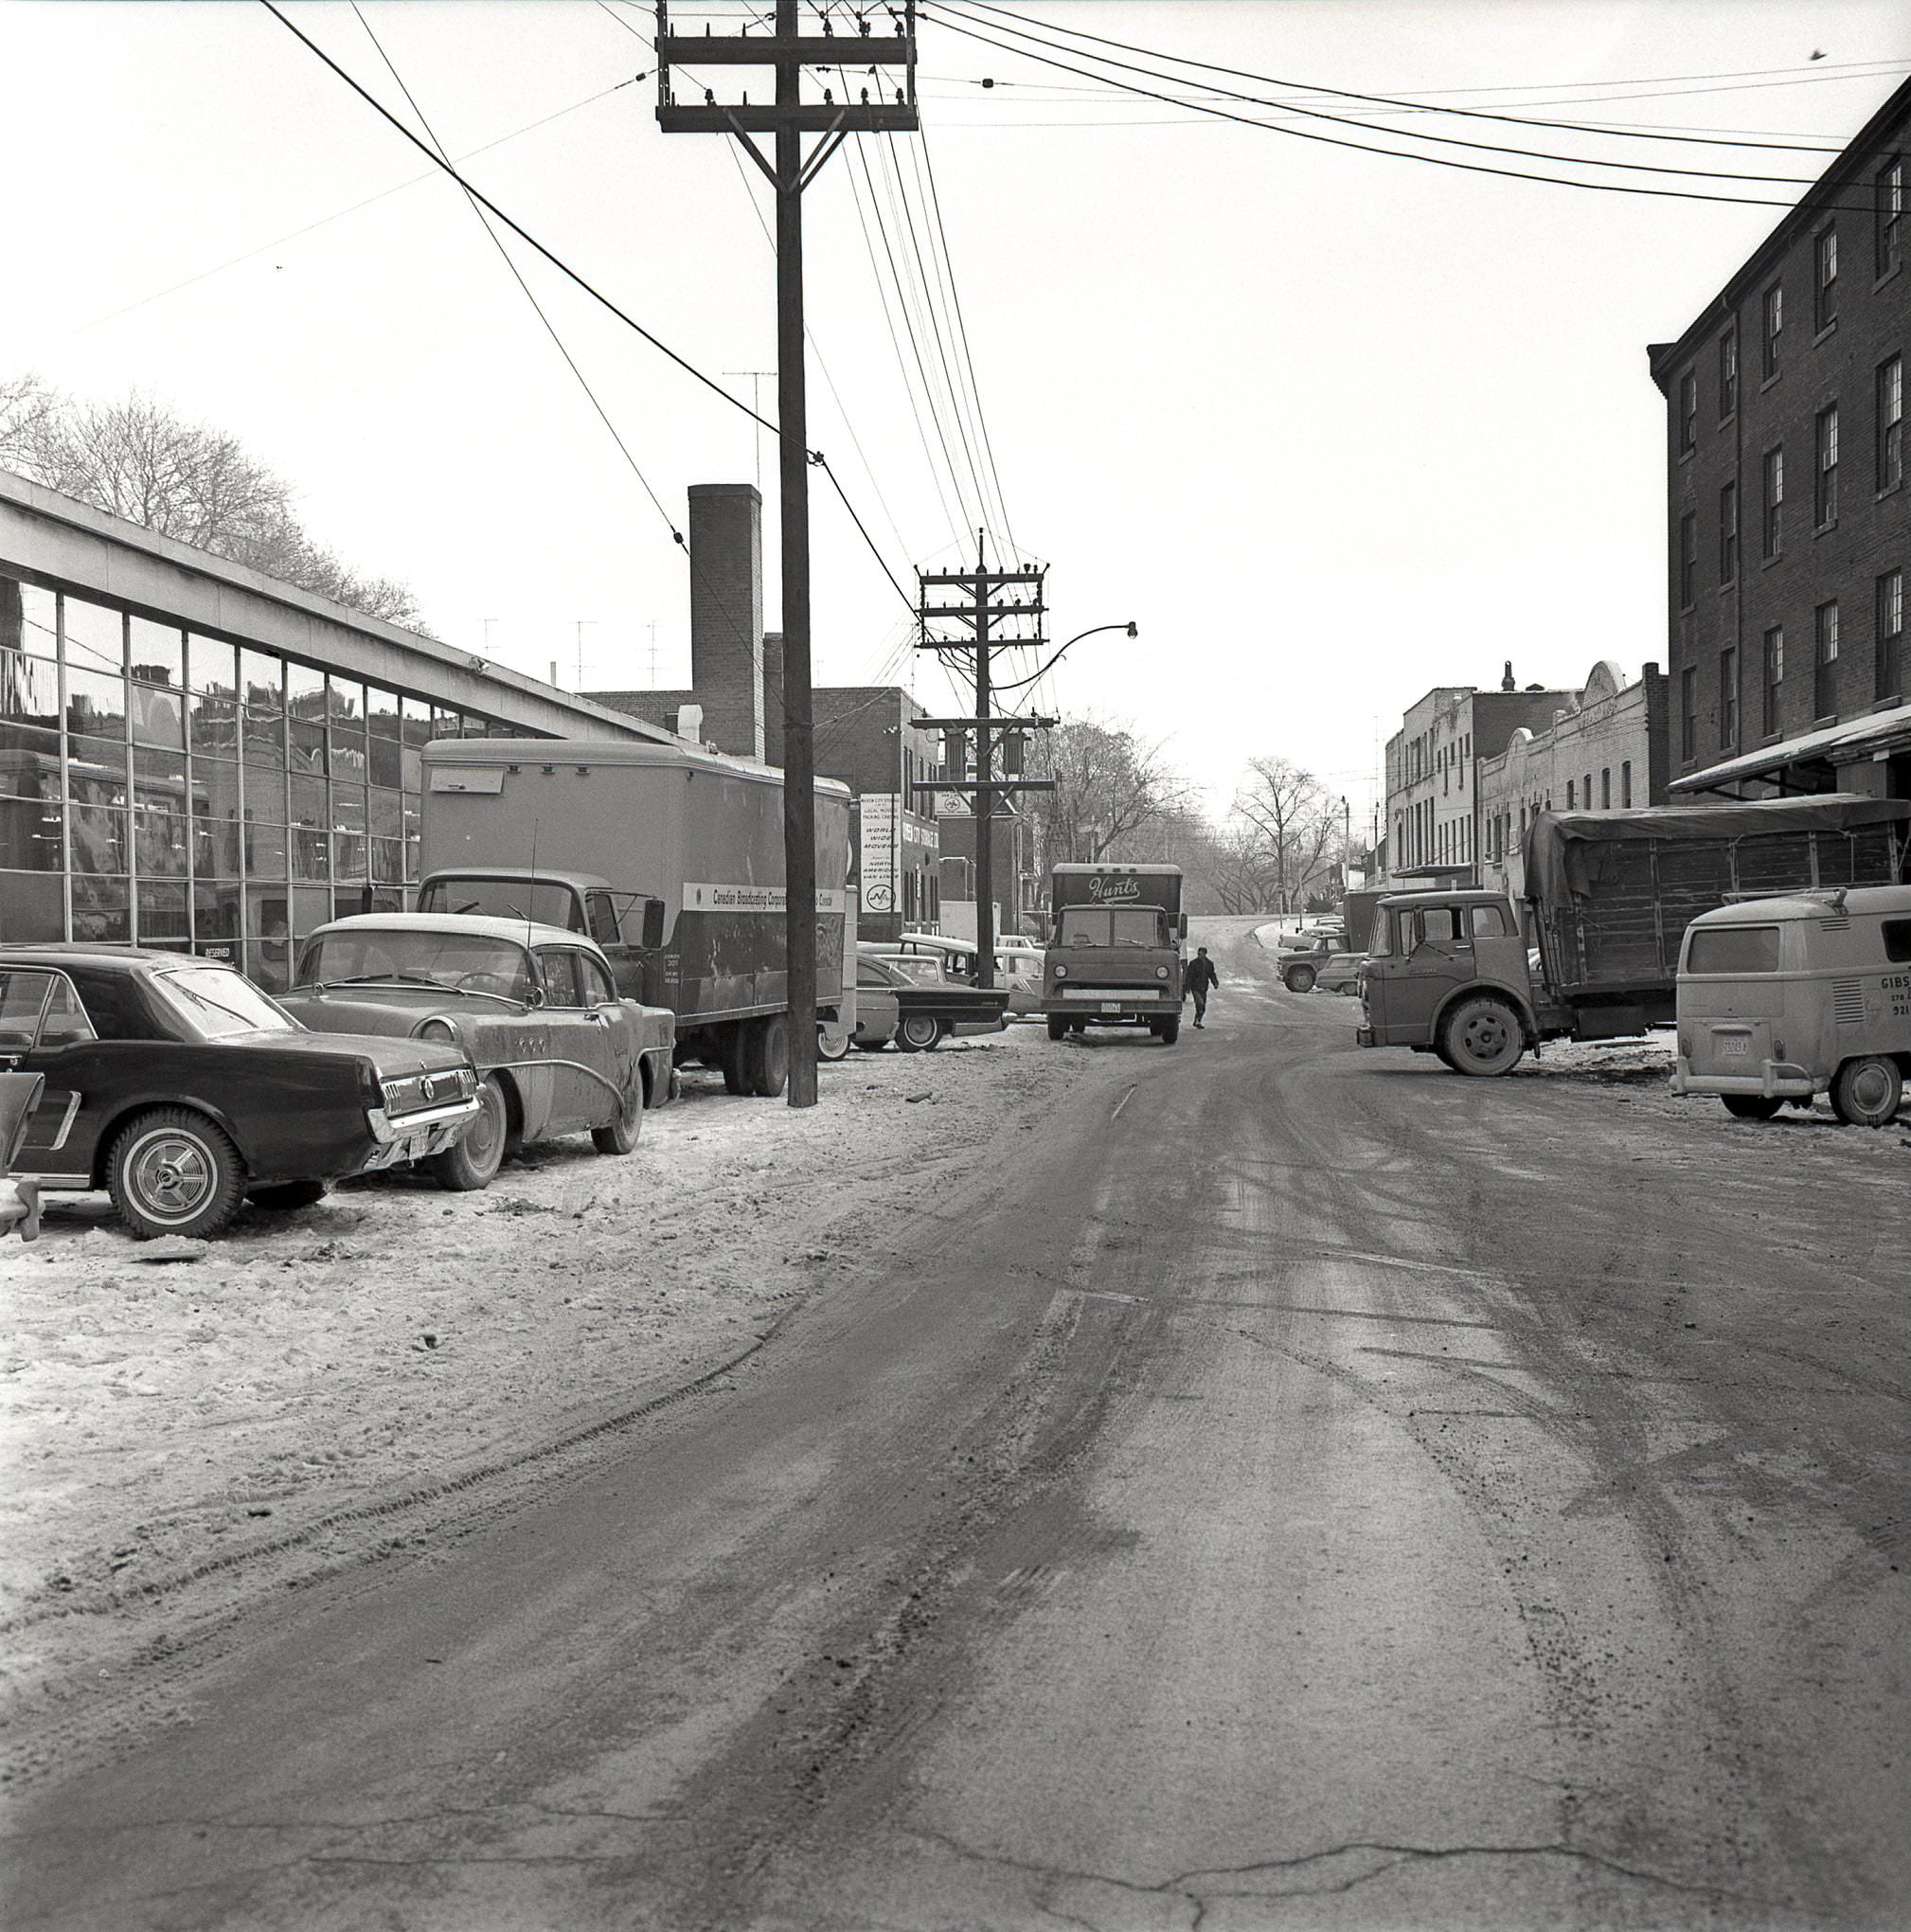 Looking east along Pears Ave. toward Avenue Rd., 1964